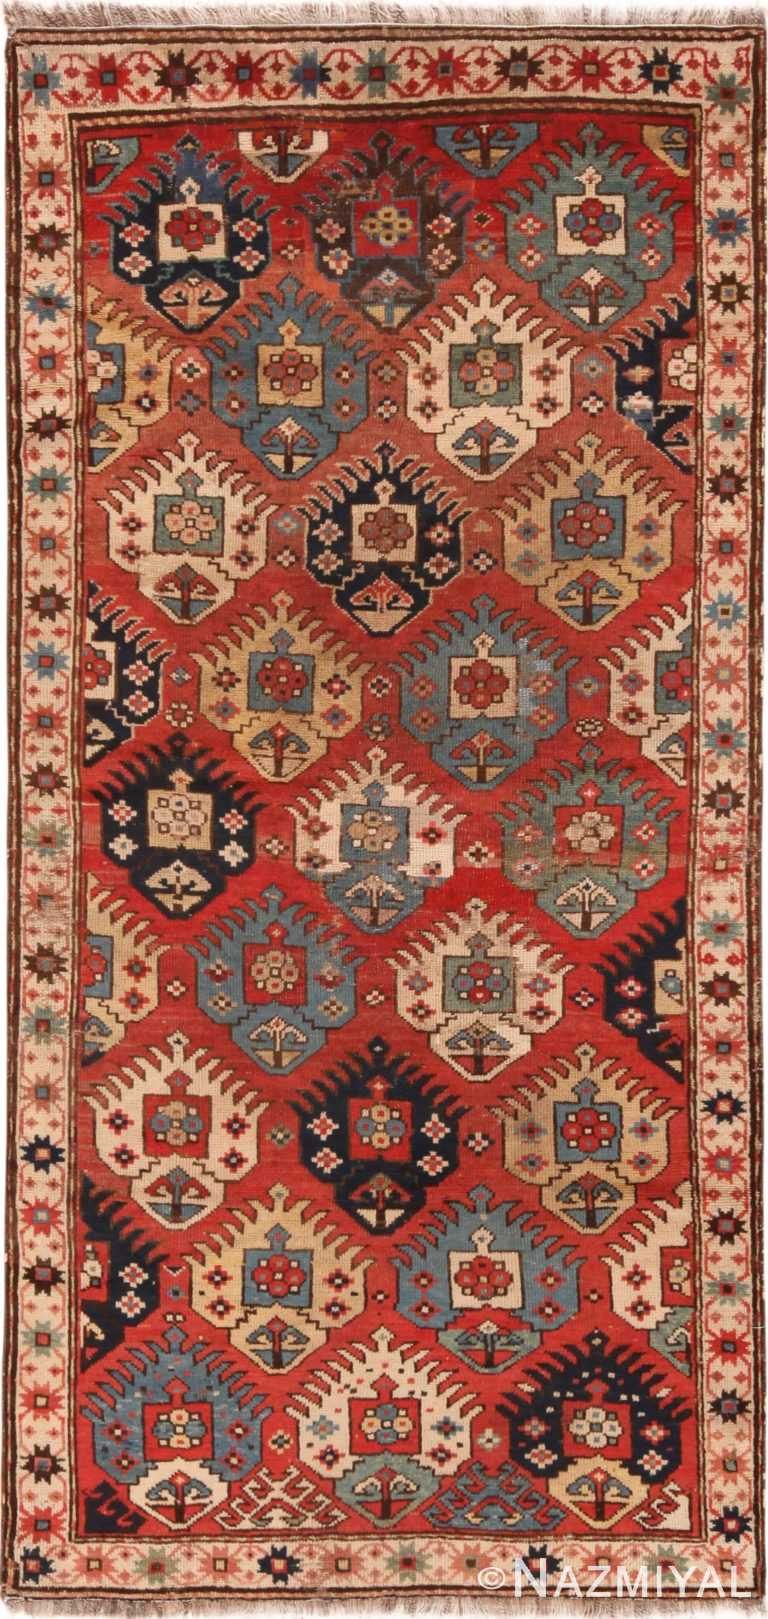 Splendid Antique Caucasian Karabagh Rug 71228 by Nazmiyal Antique Rugs